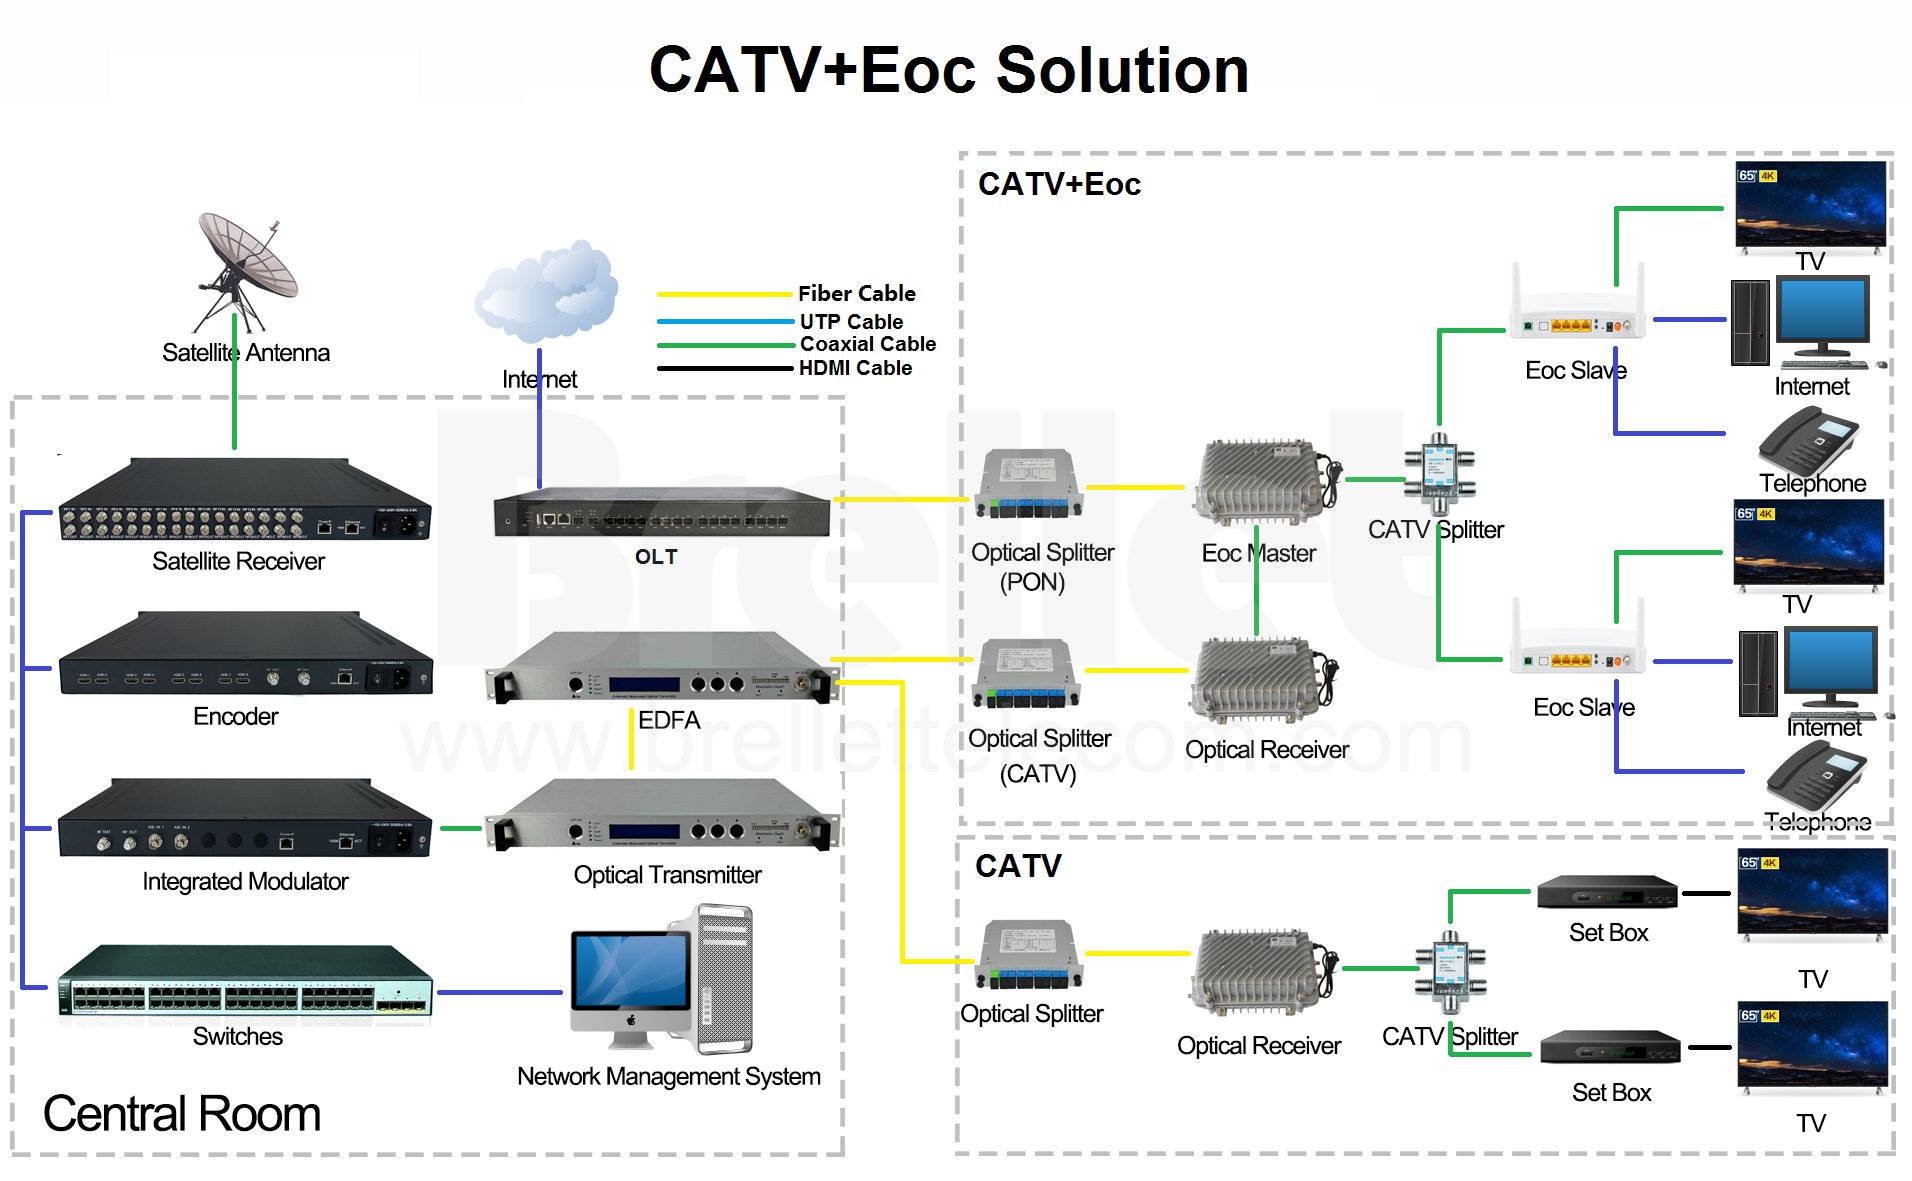 CATV+Eoc Solution